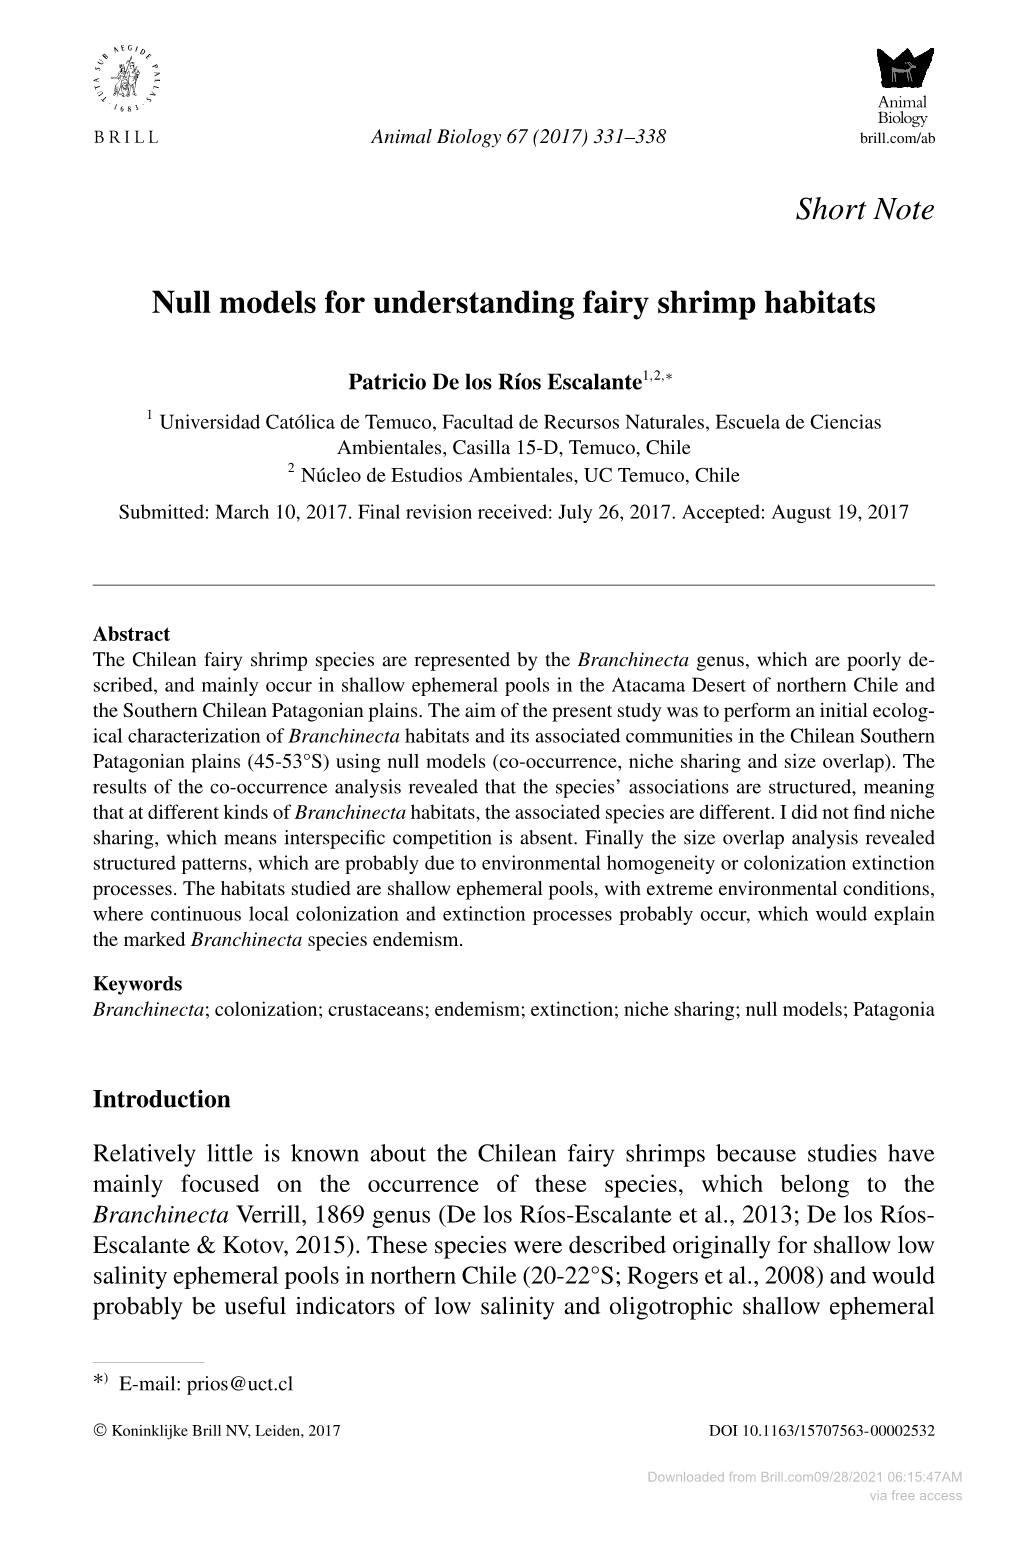 Short Note Null Models for Understanding Fairy Shrimp Habitats